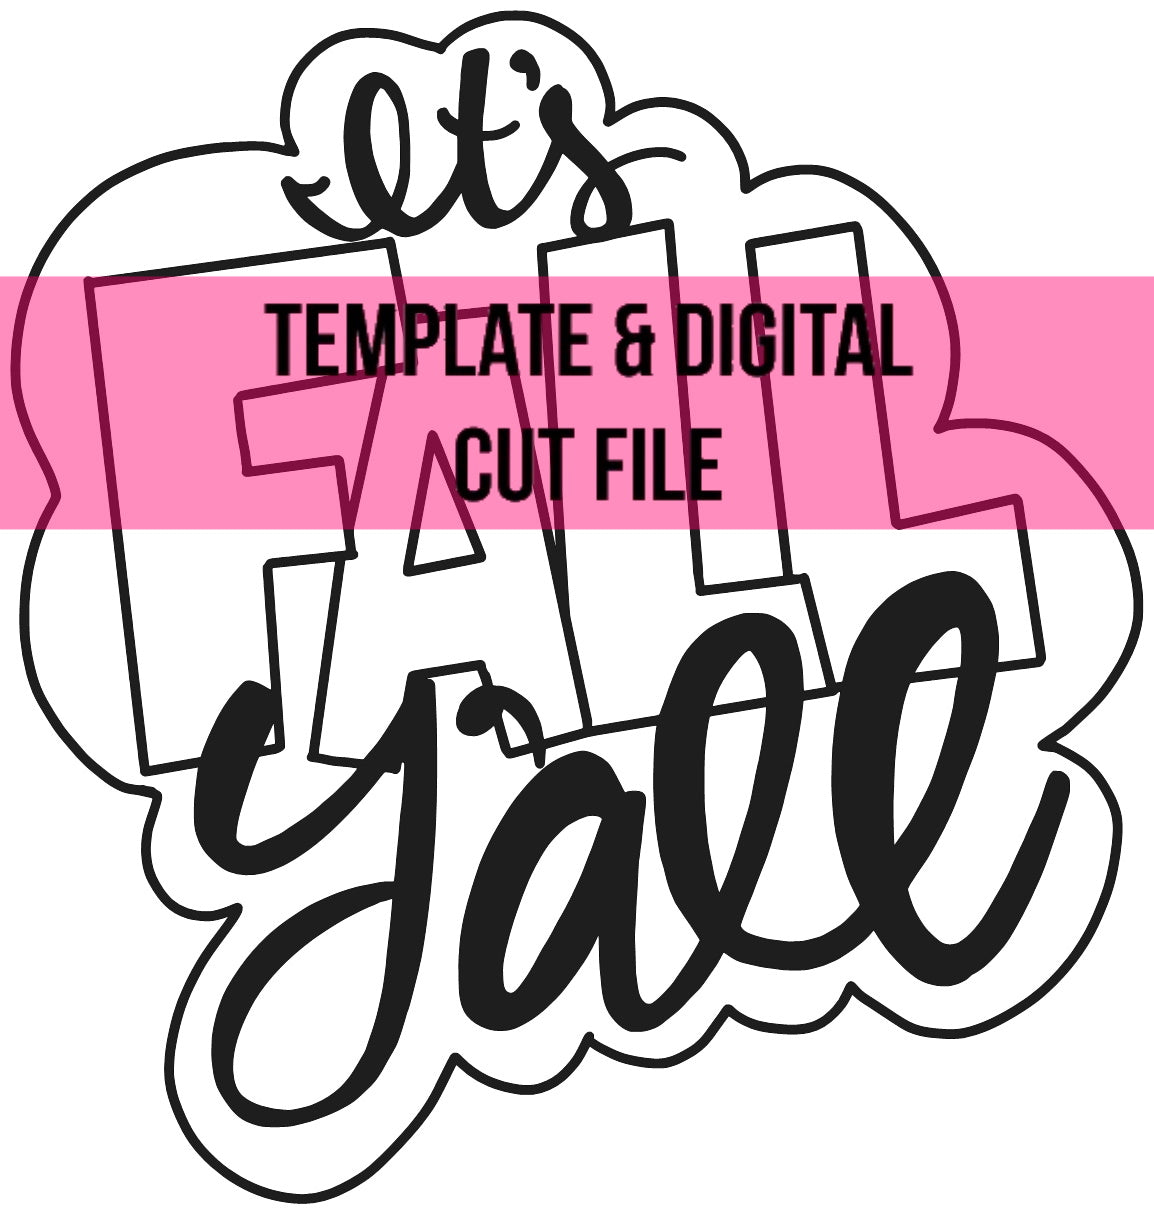 It's Fall Y'all Template & Digital Cut File